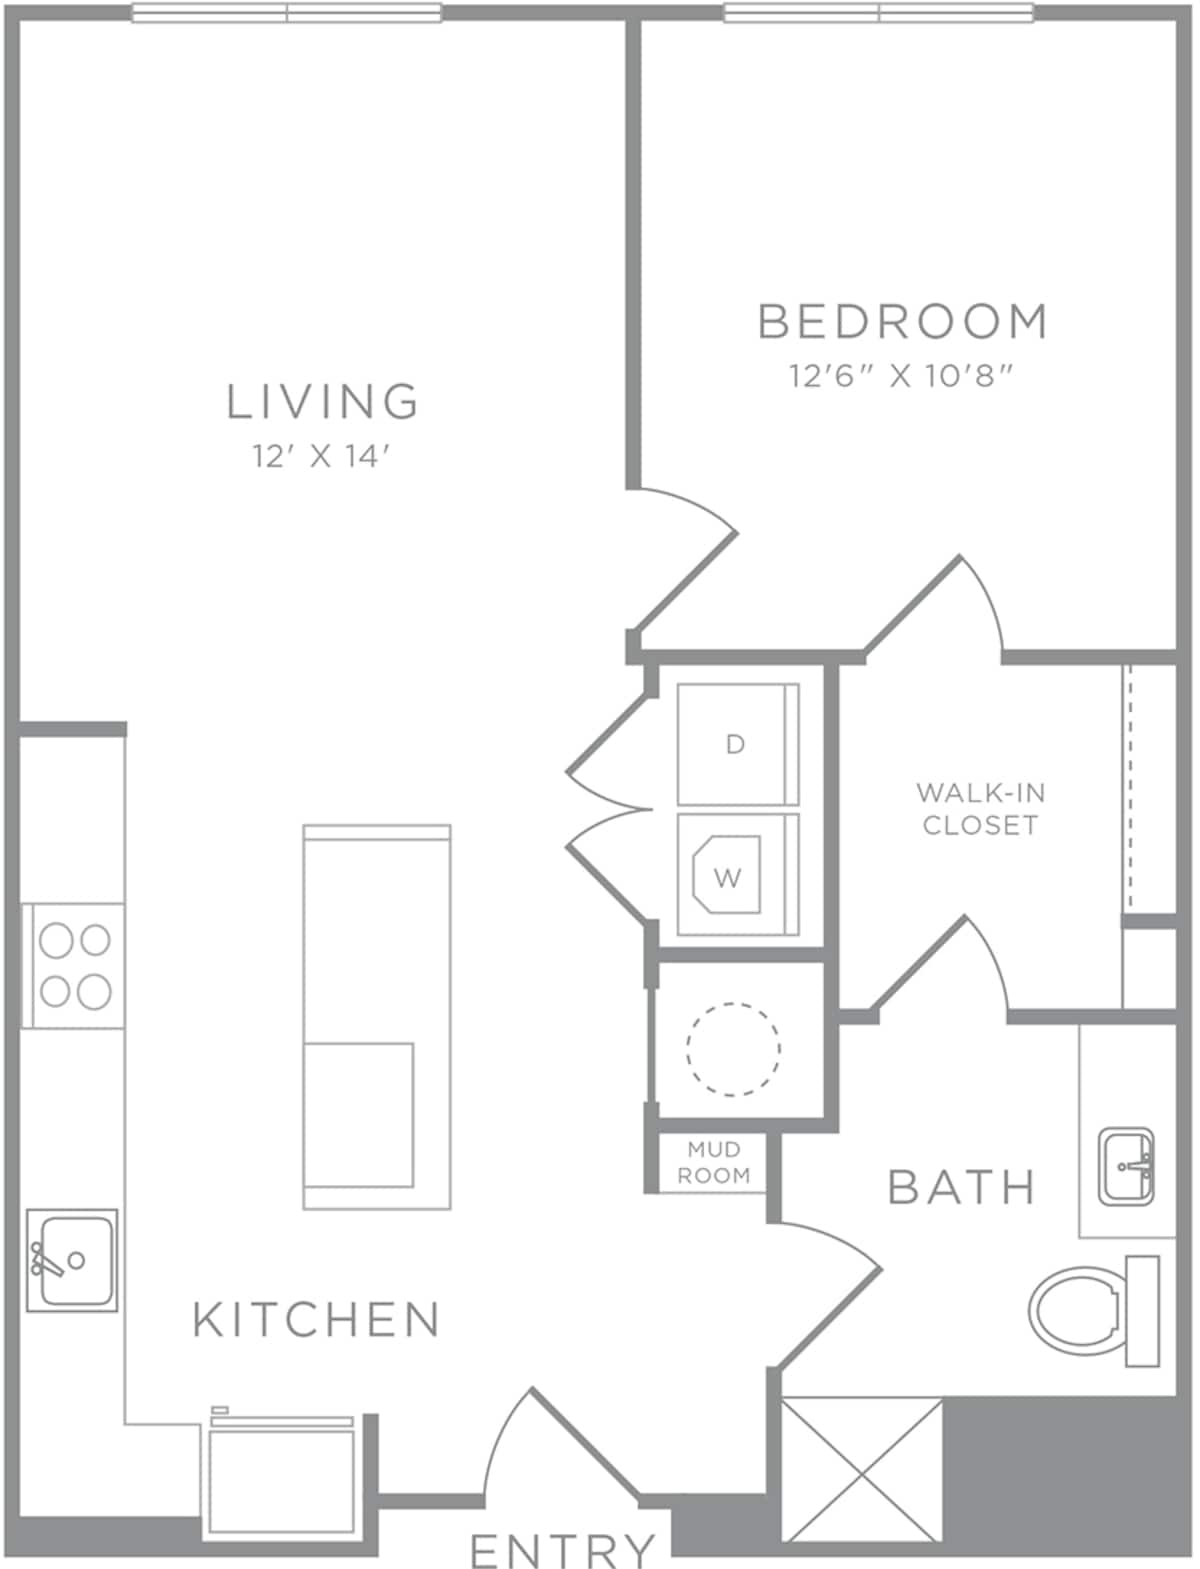 Floorplan diagram for A6.1, showing 1 bedroom